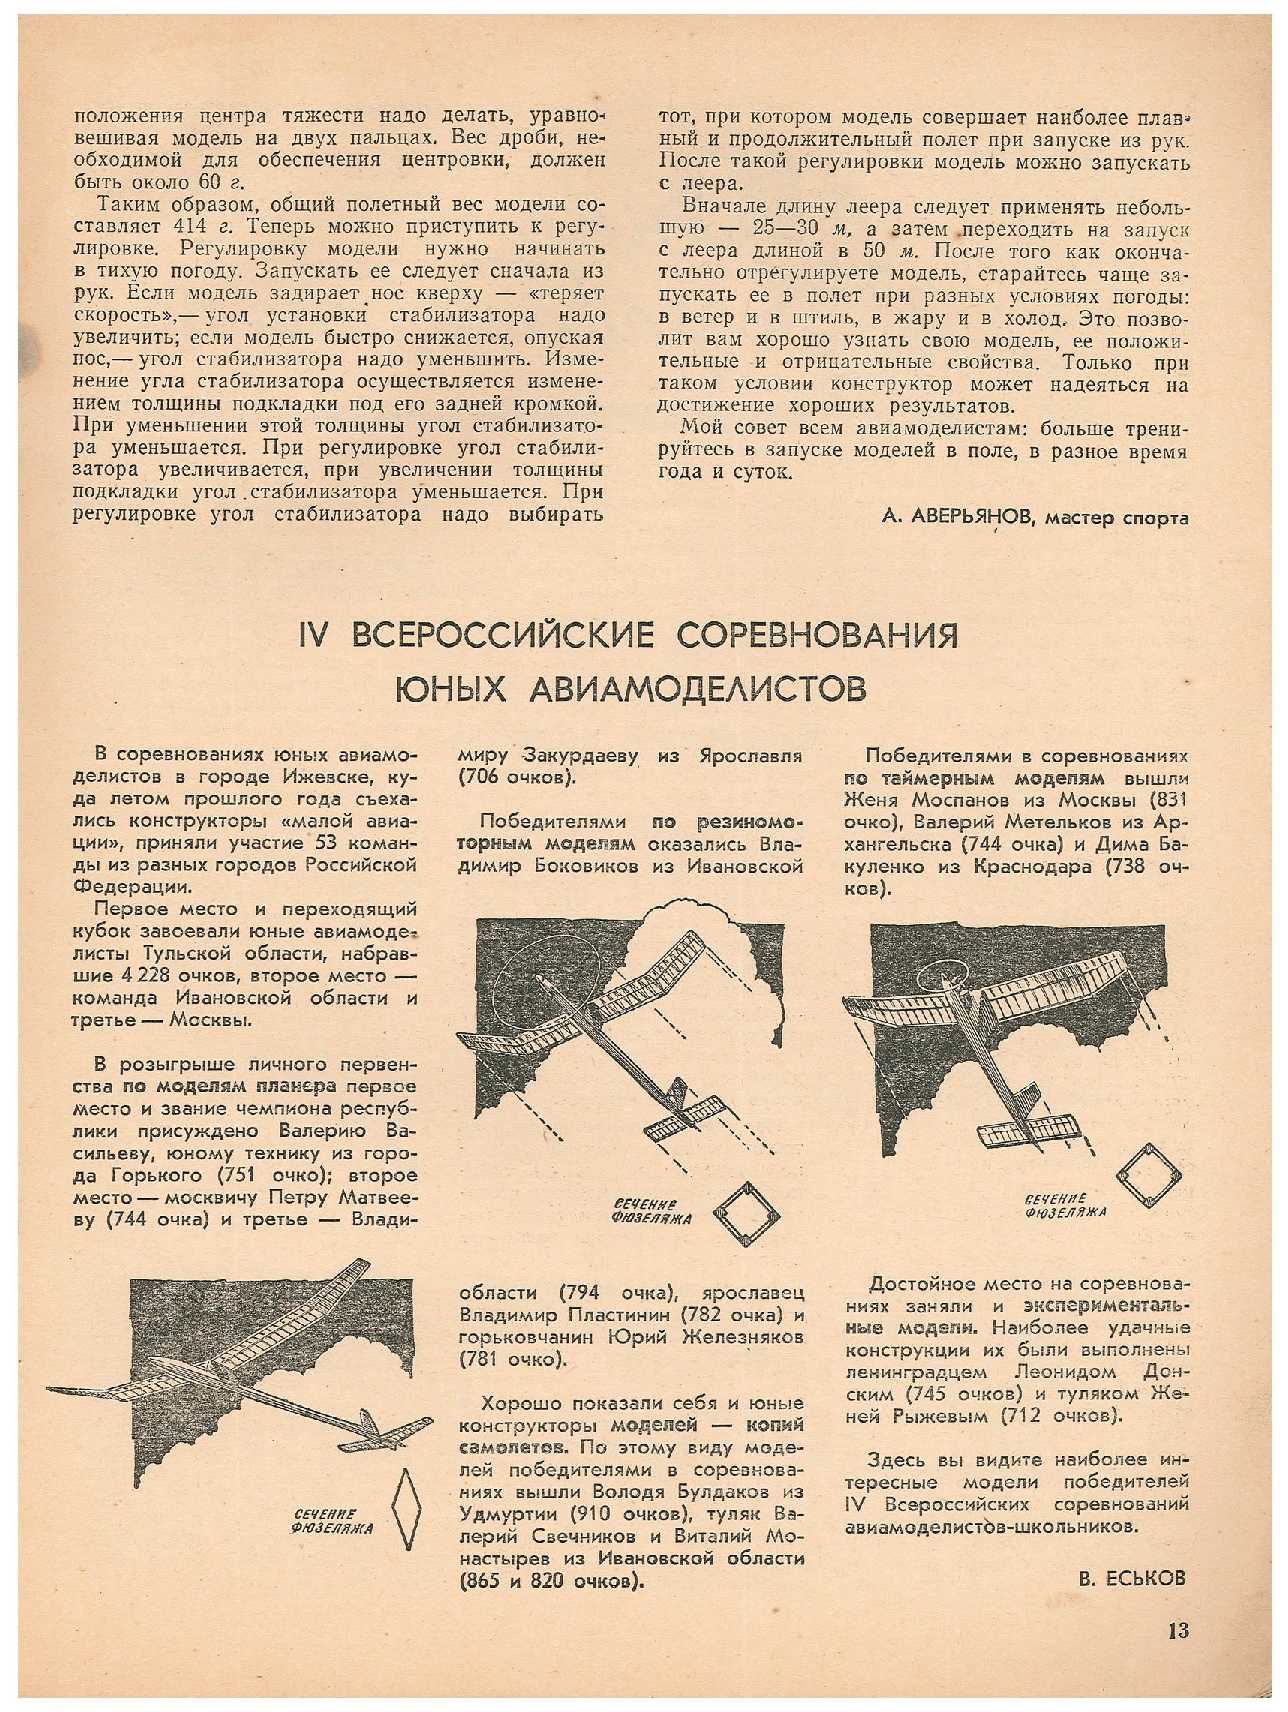 ЮМК 1, 1962, 13 c.